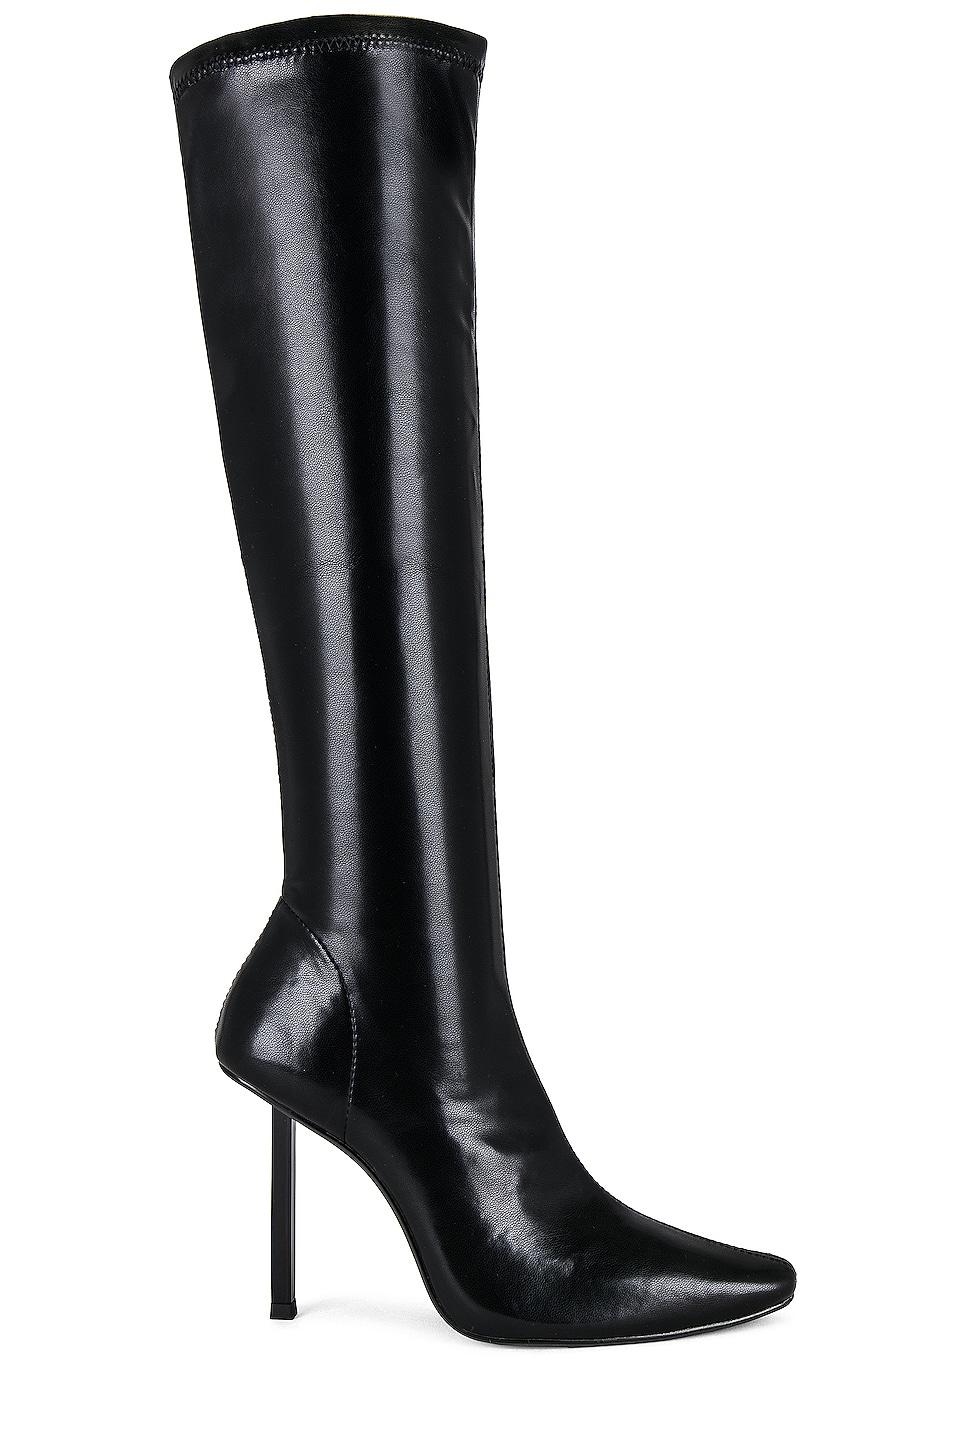 Femme LA The Whistler Boot in Black | Lyst